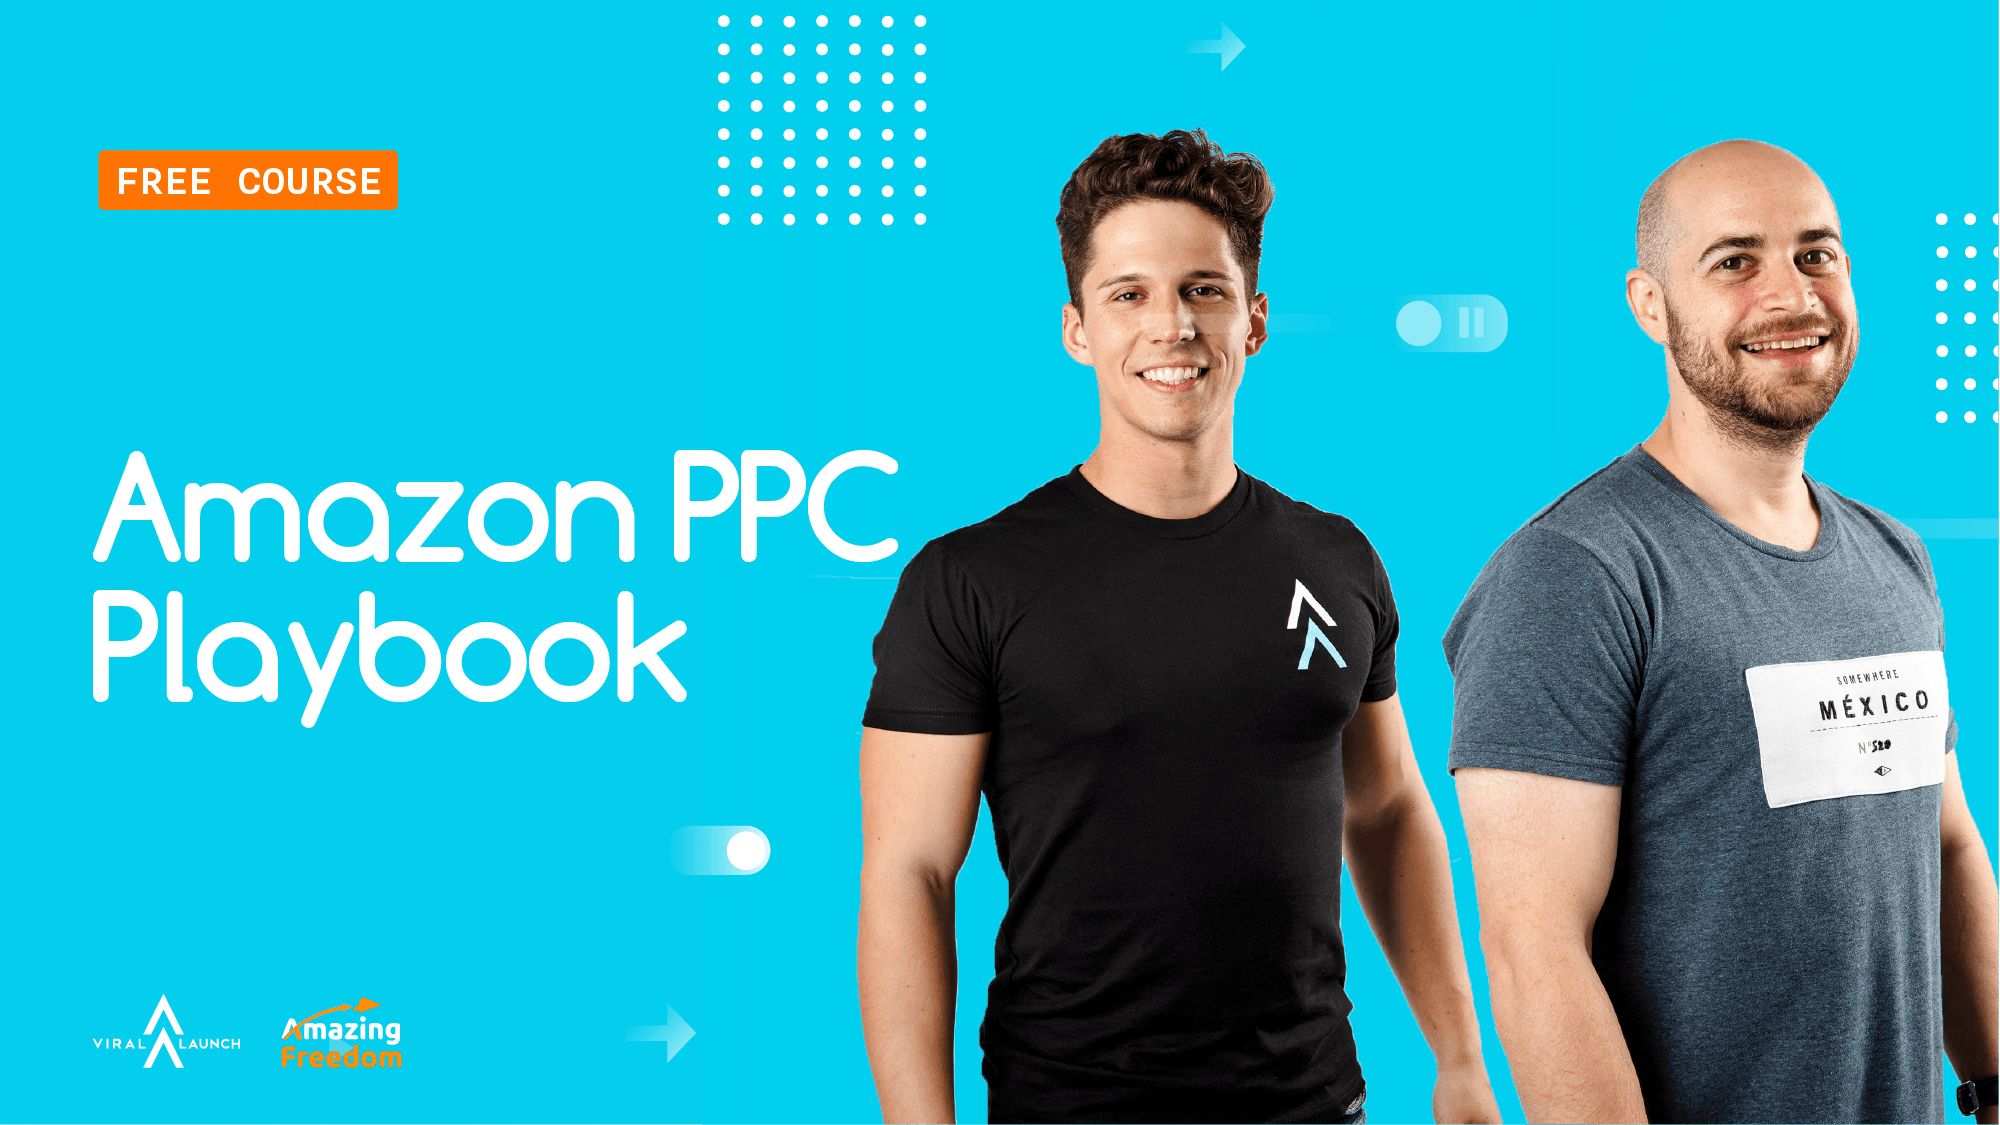 Amazon PPC 101 | Viral Launch